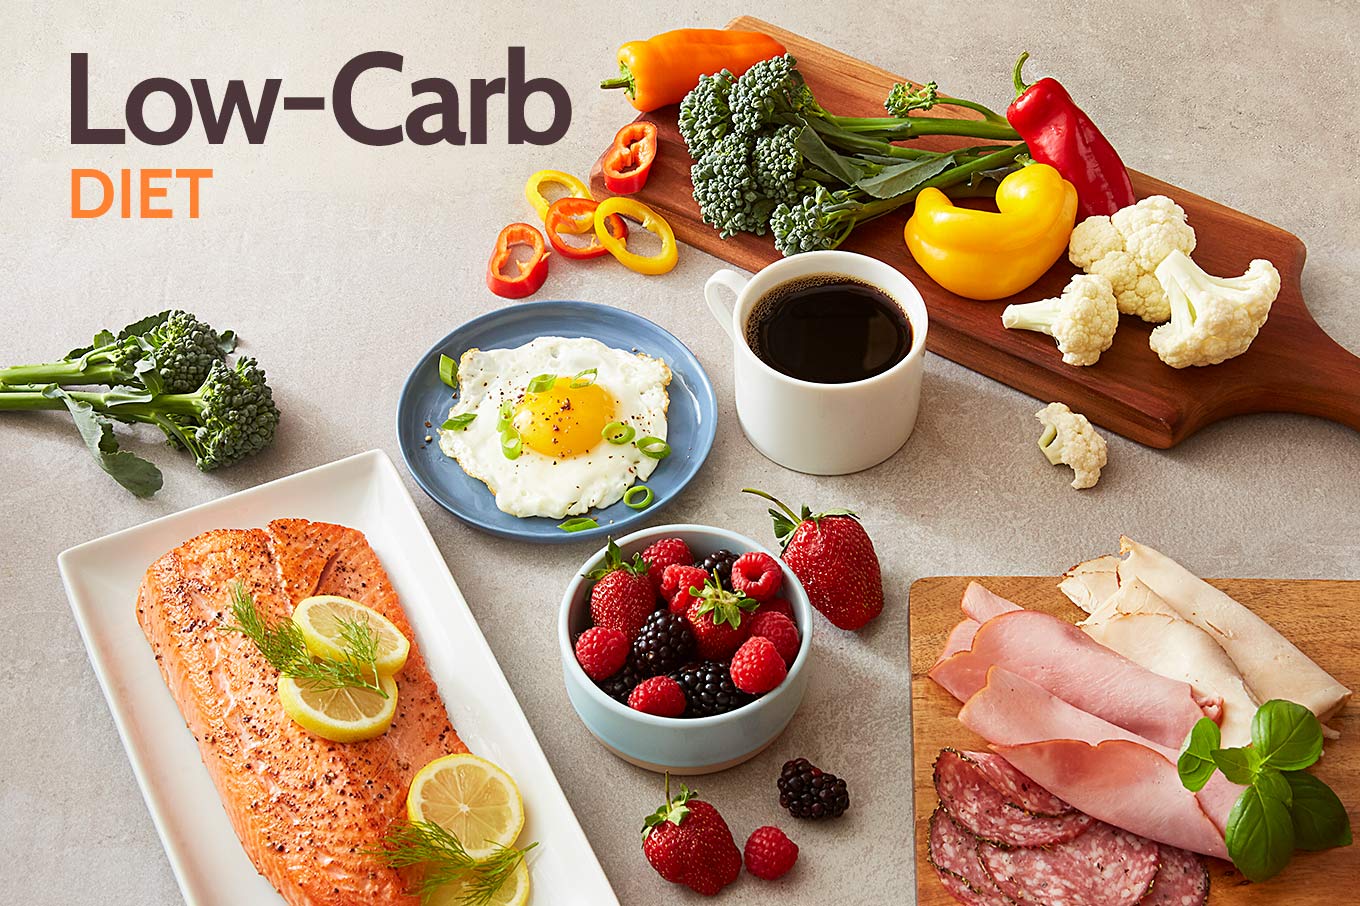 Hasil studi: Pola makan rendah karbo turunkan risiko penyakit jantung pada penderita kolesterol